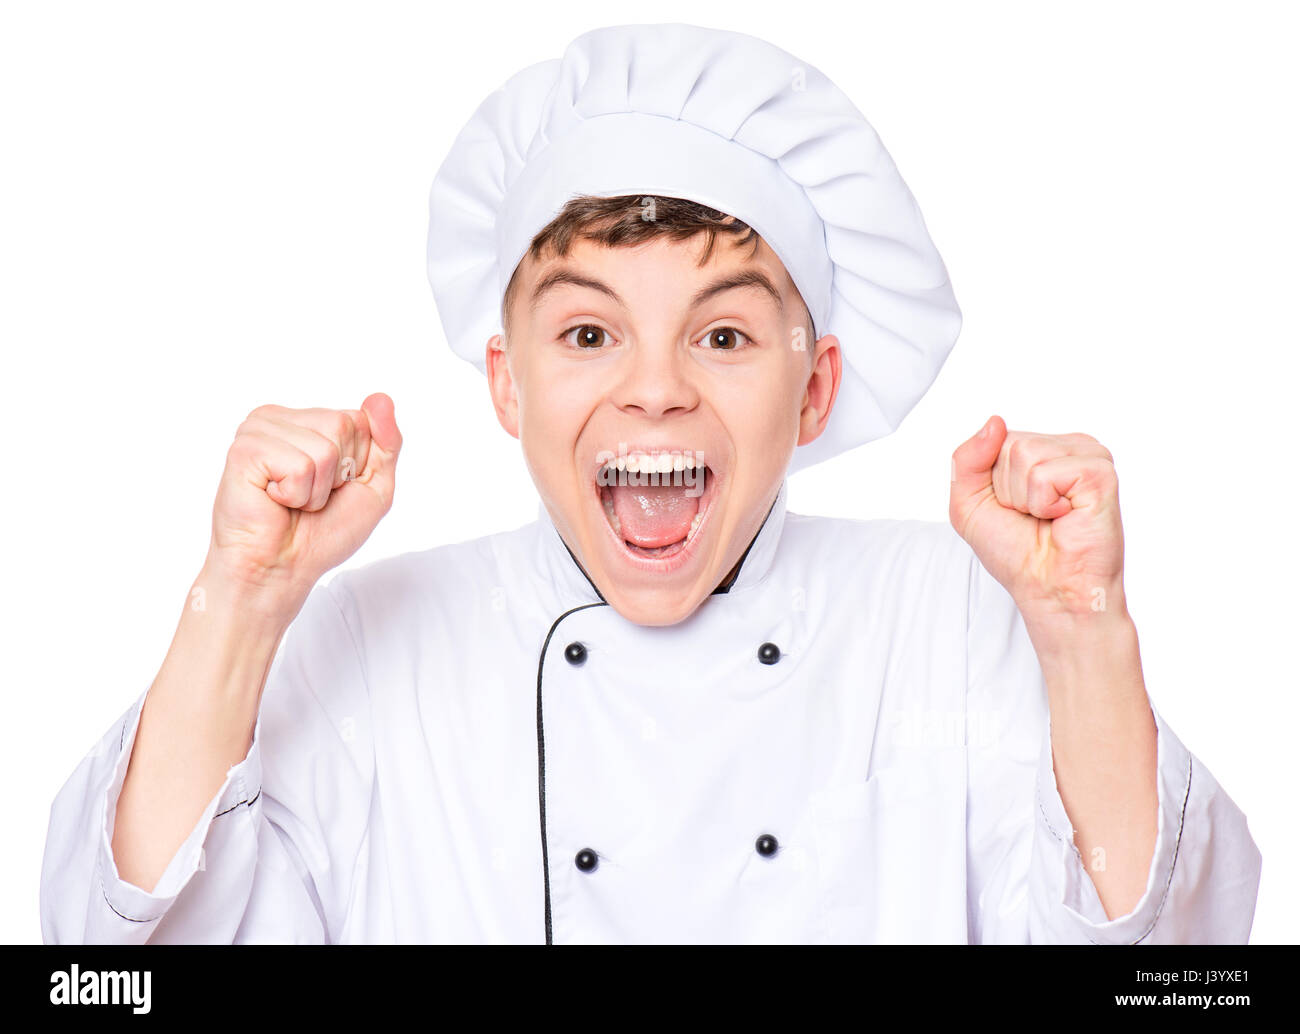 Teen boy wearing chef uniform Stock Photo